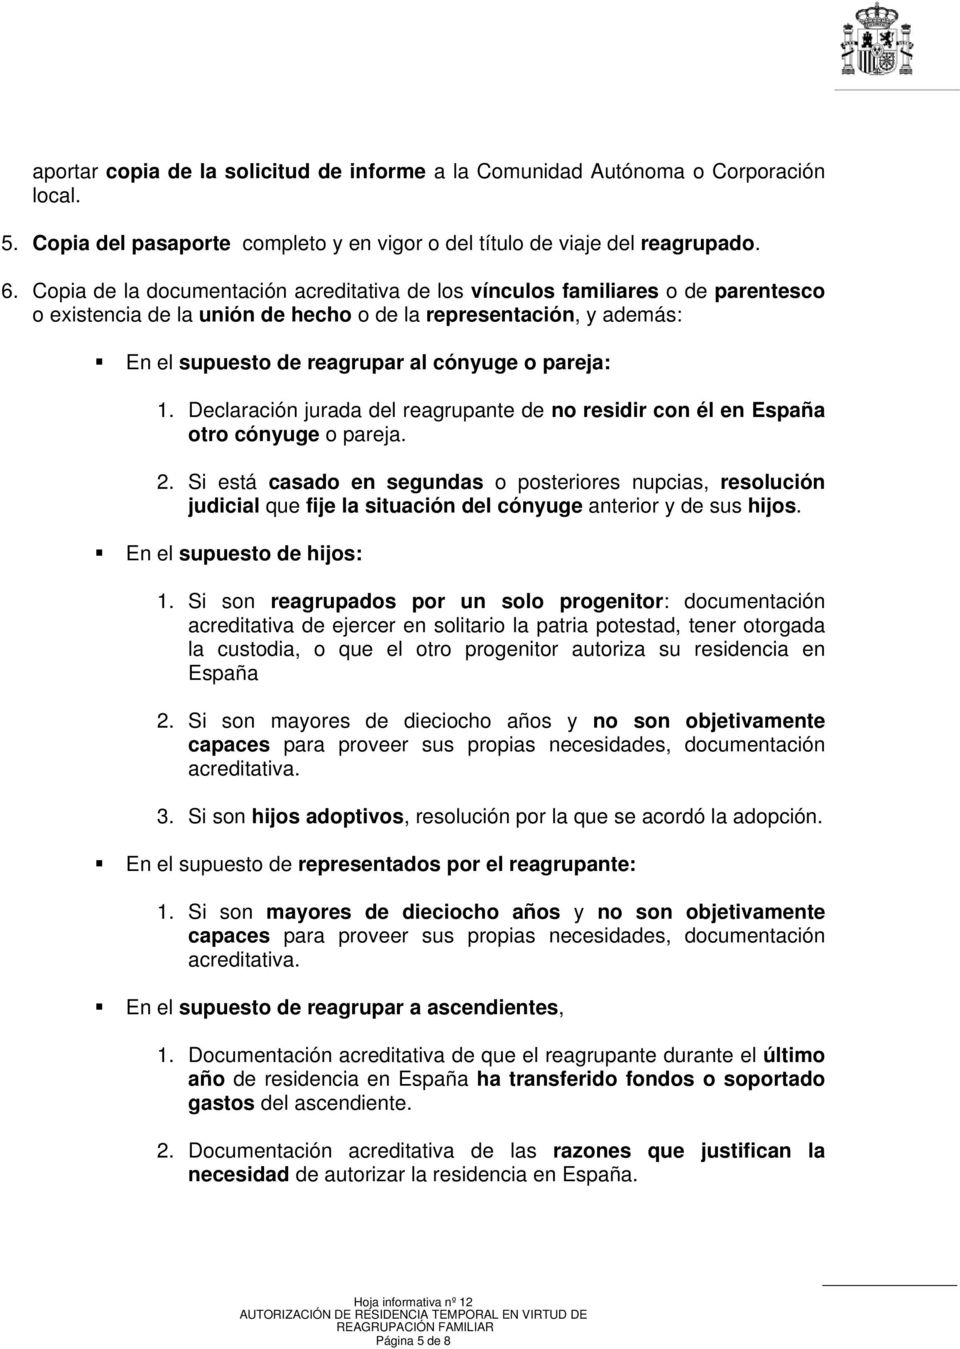 1. Declaración jurada del reagrupante de no residir con él en España otro cónyuge o pareja. 2.